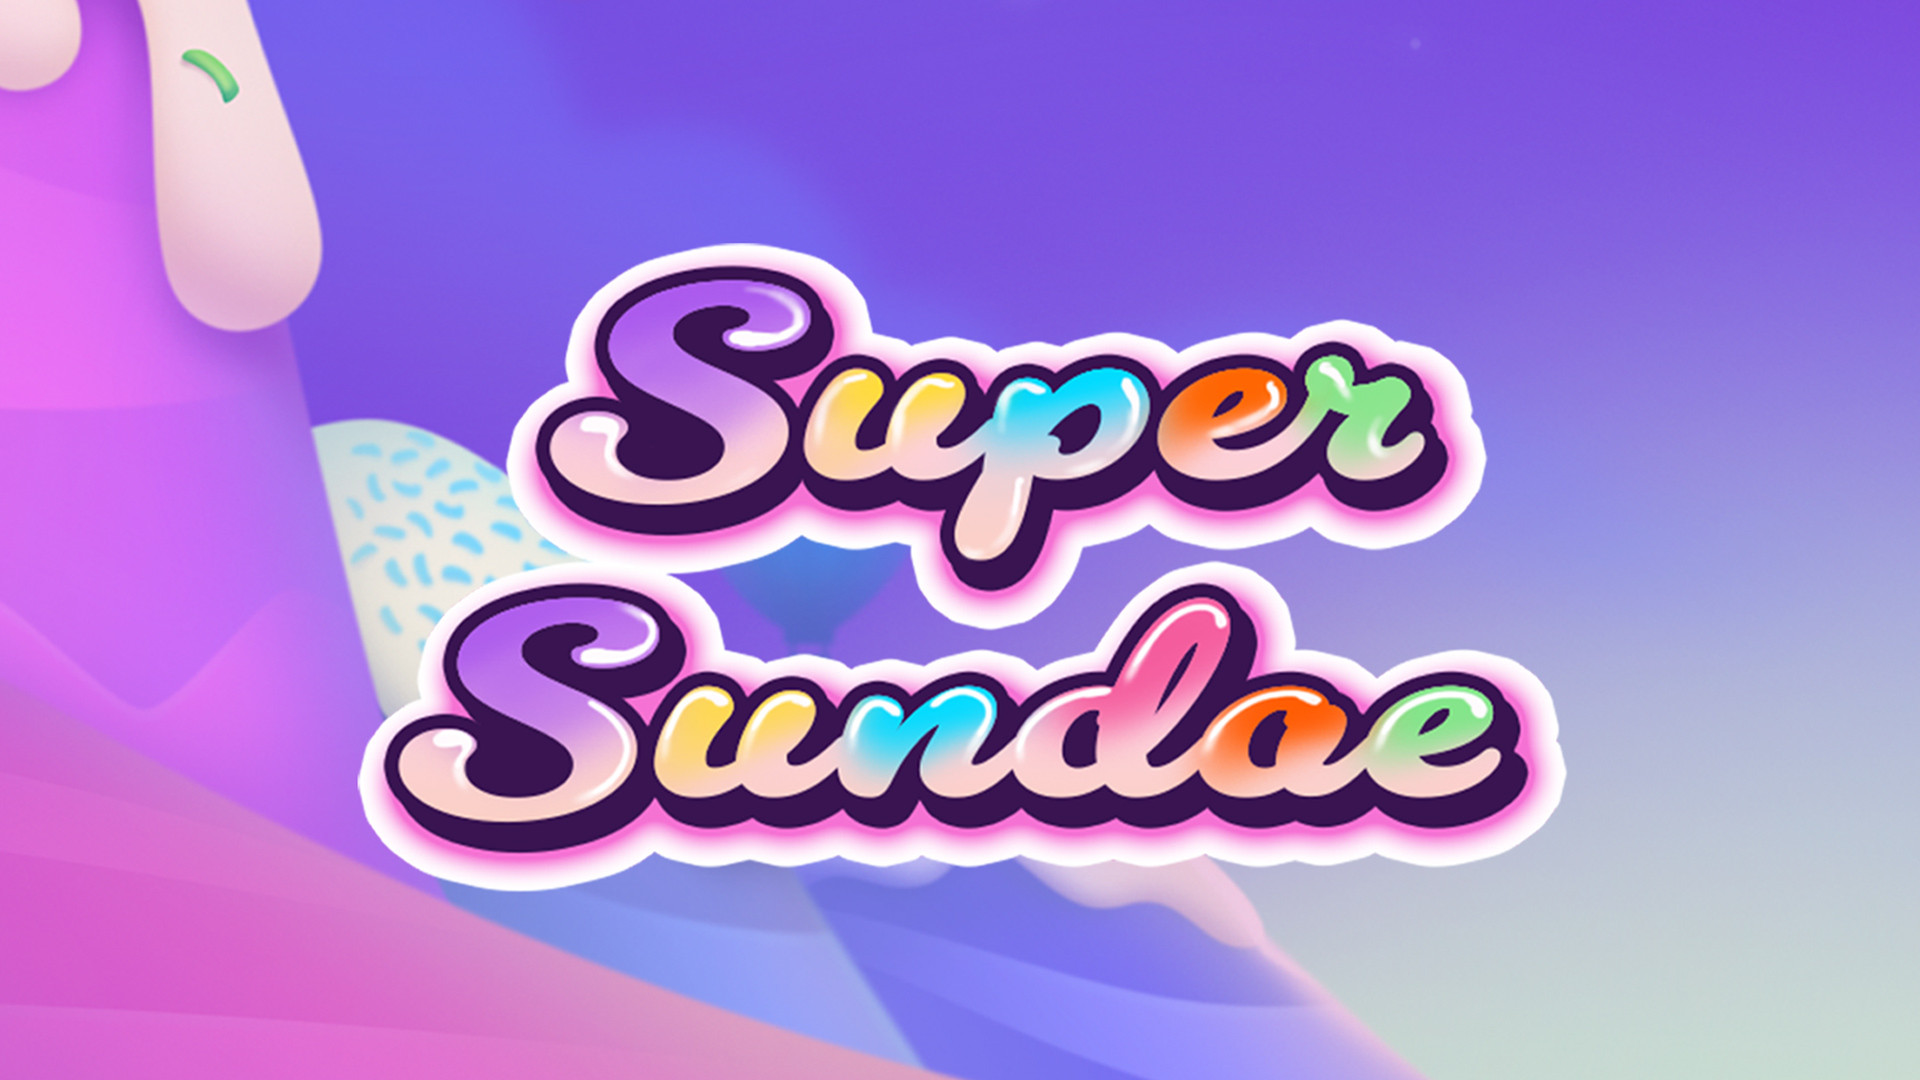 Super Sundae